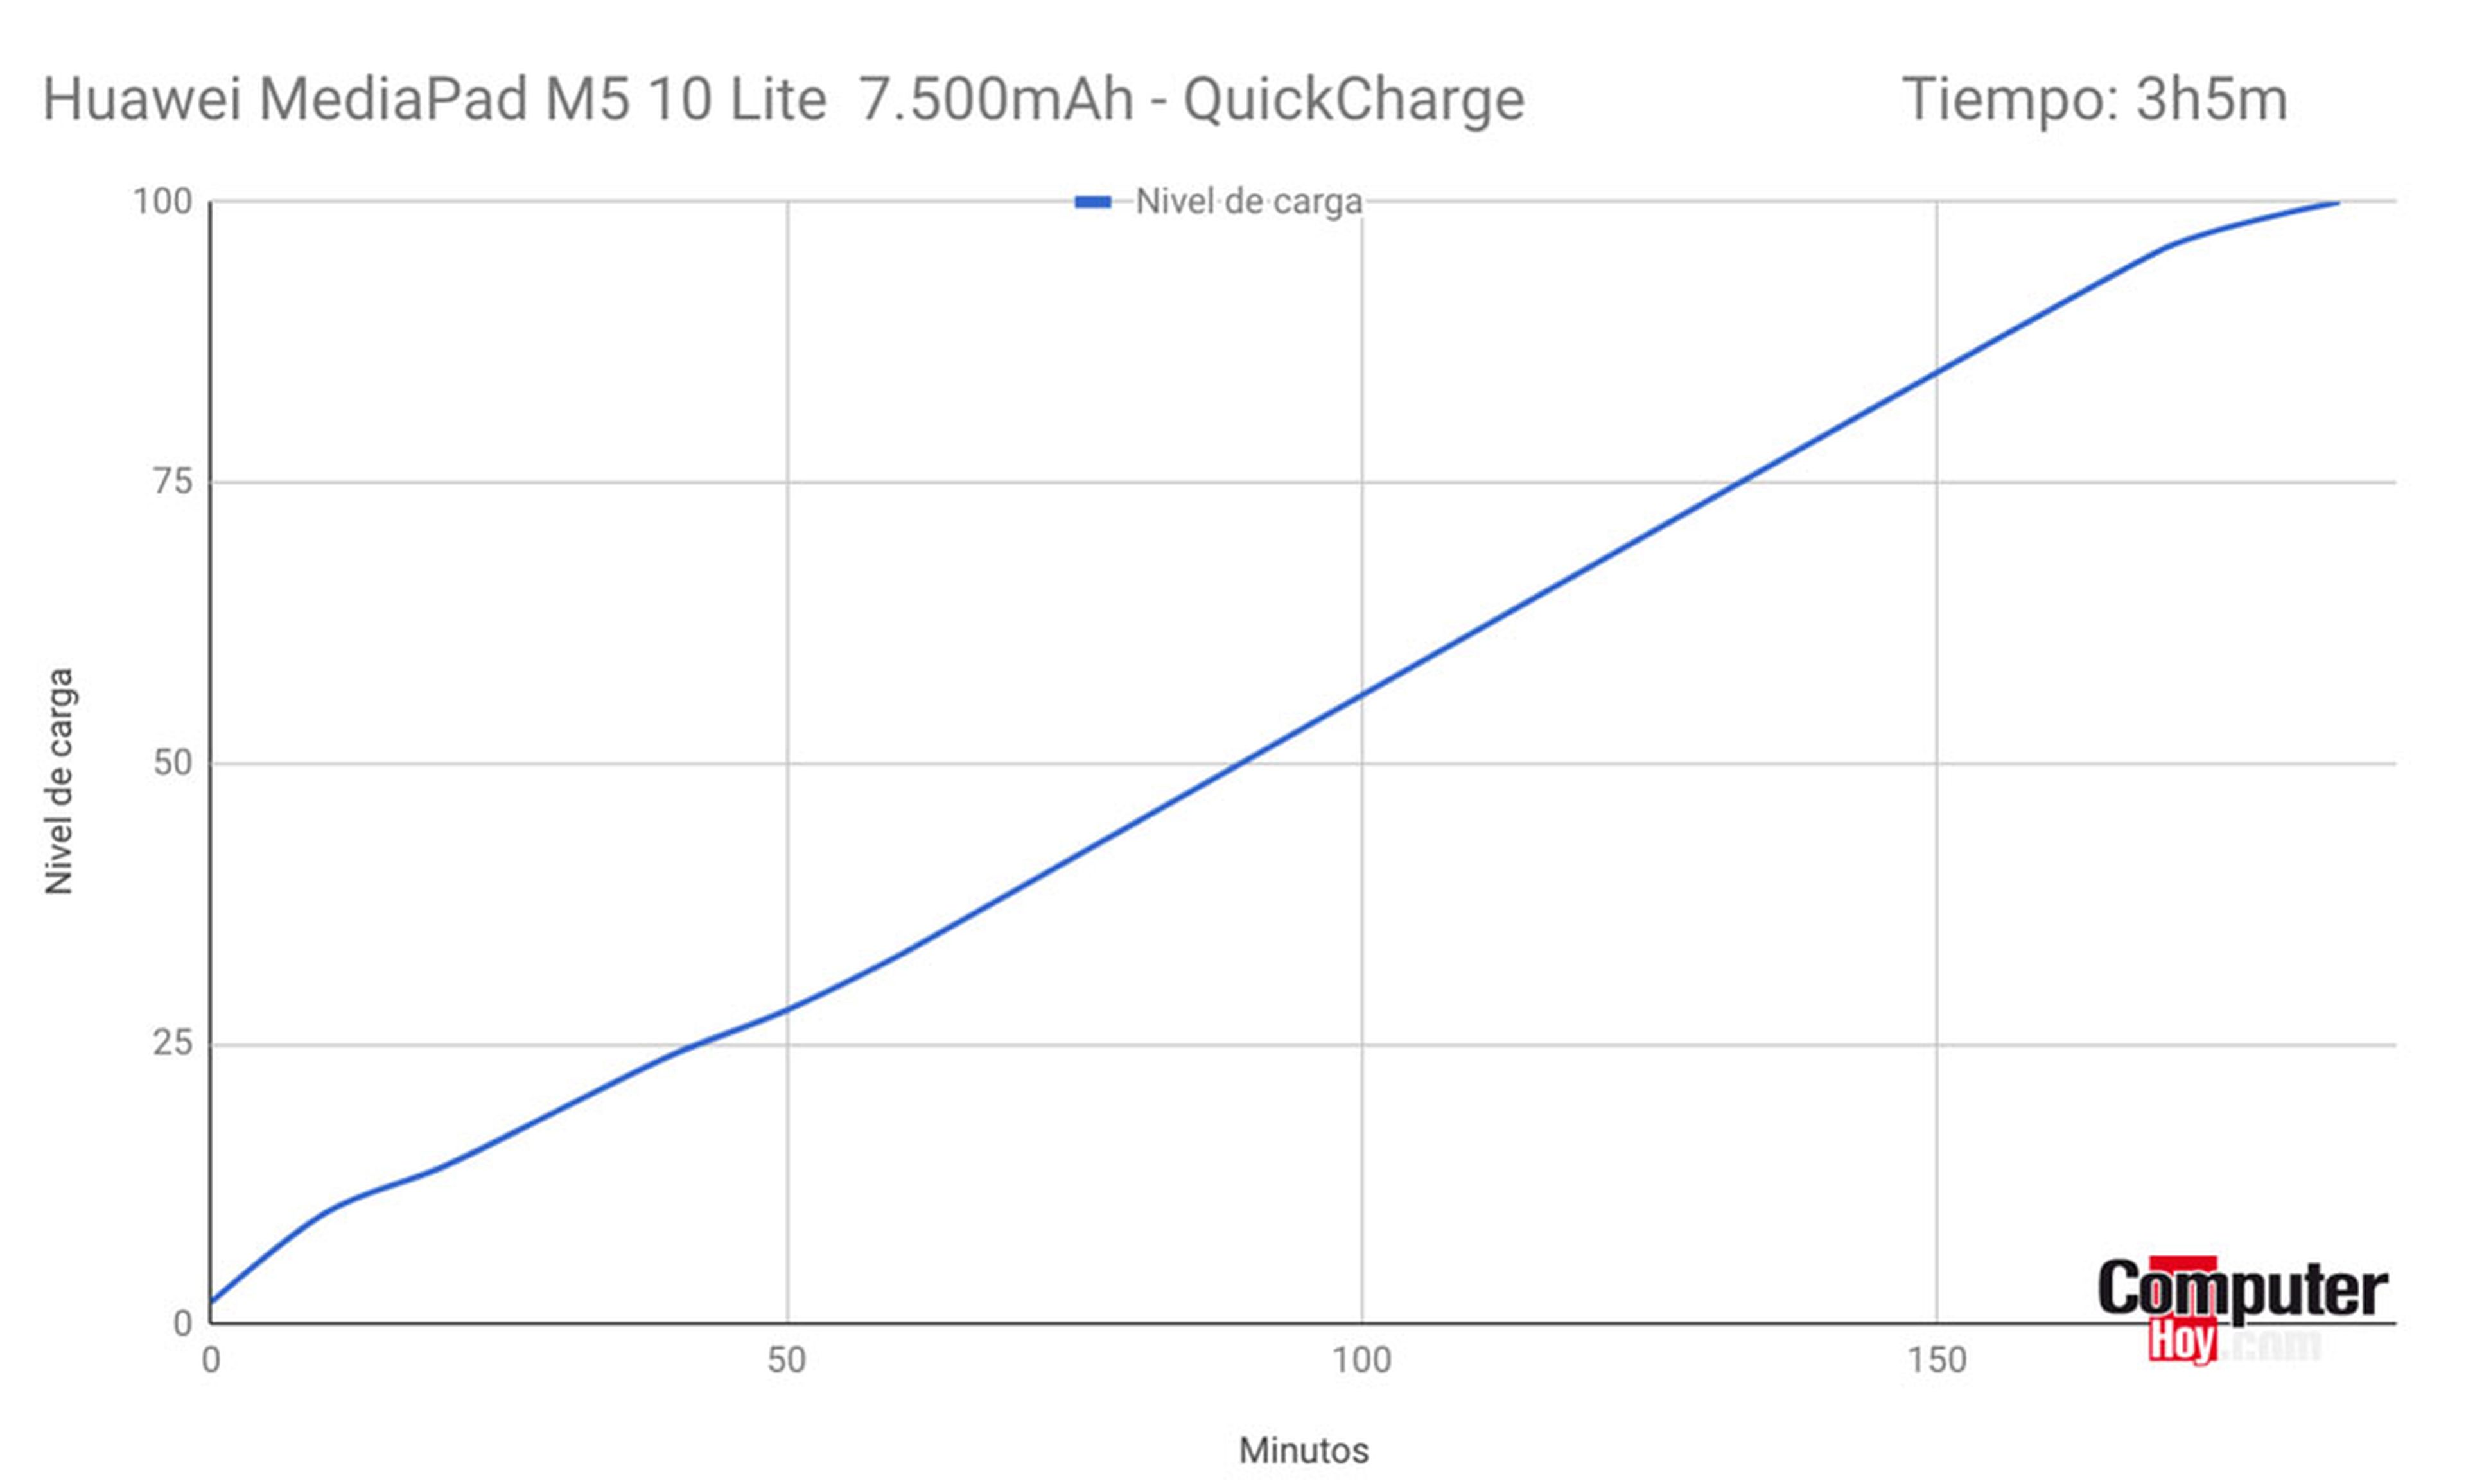 Tiempo de carga de la MediaPad M5 10 Lite